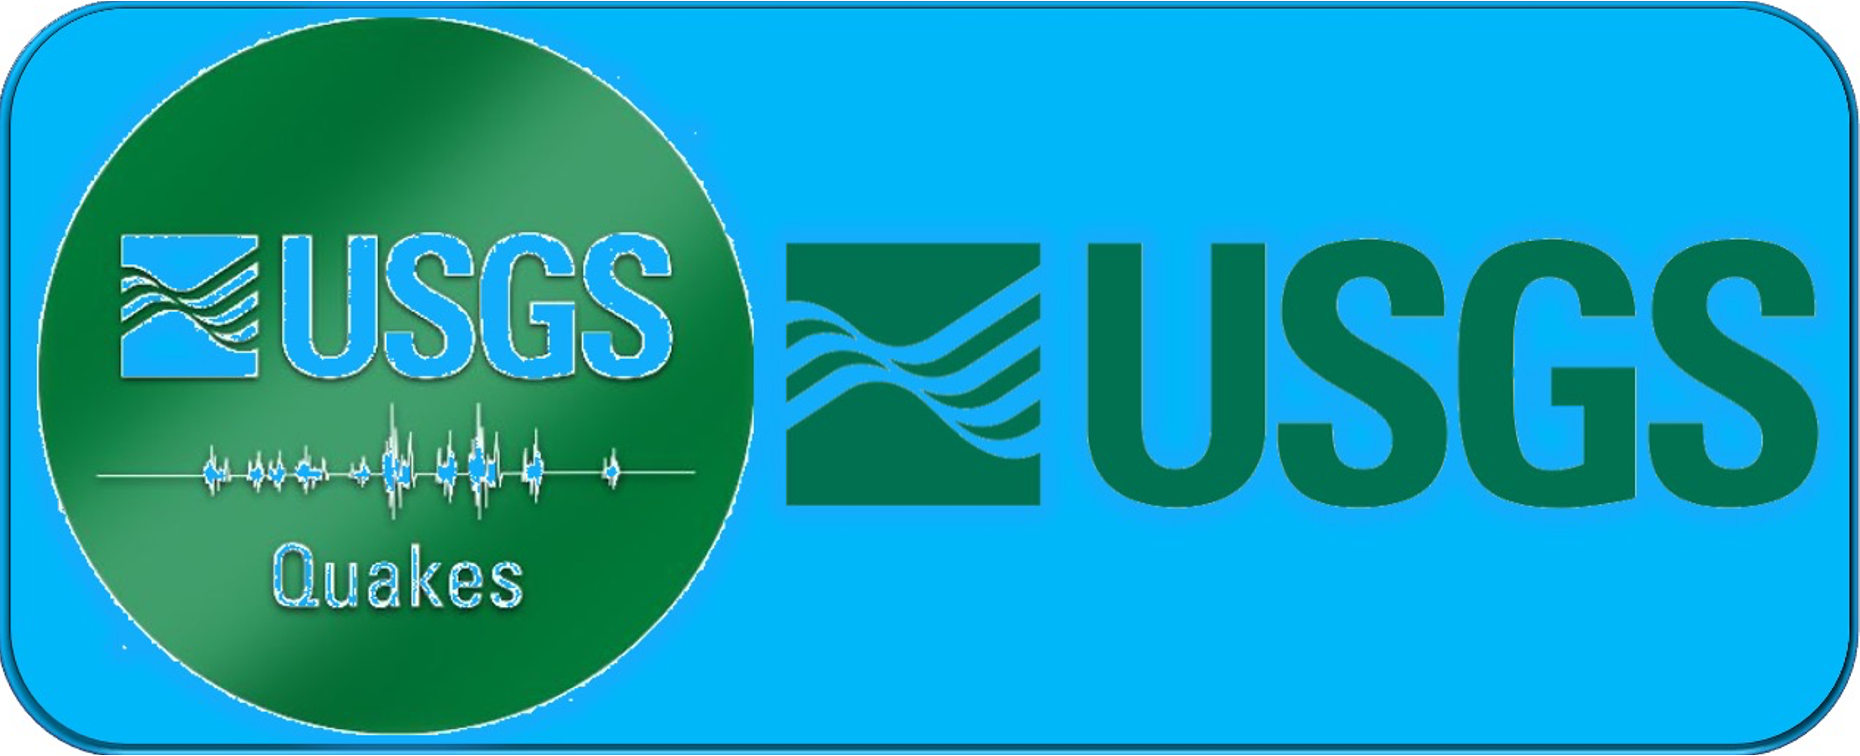 USGS EarthQuake logo.png